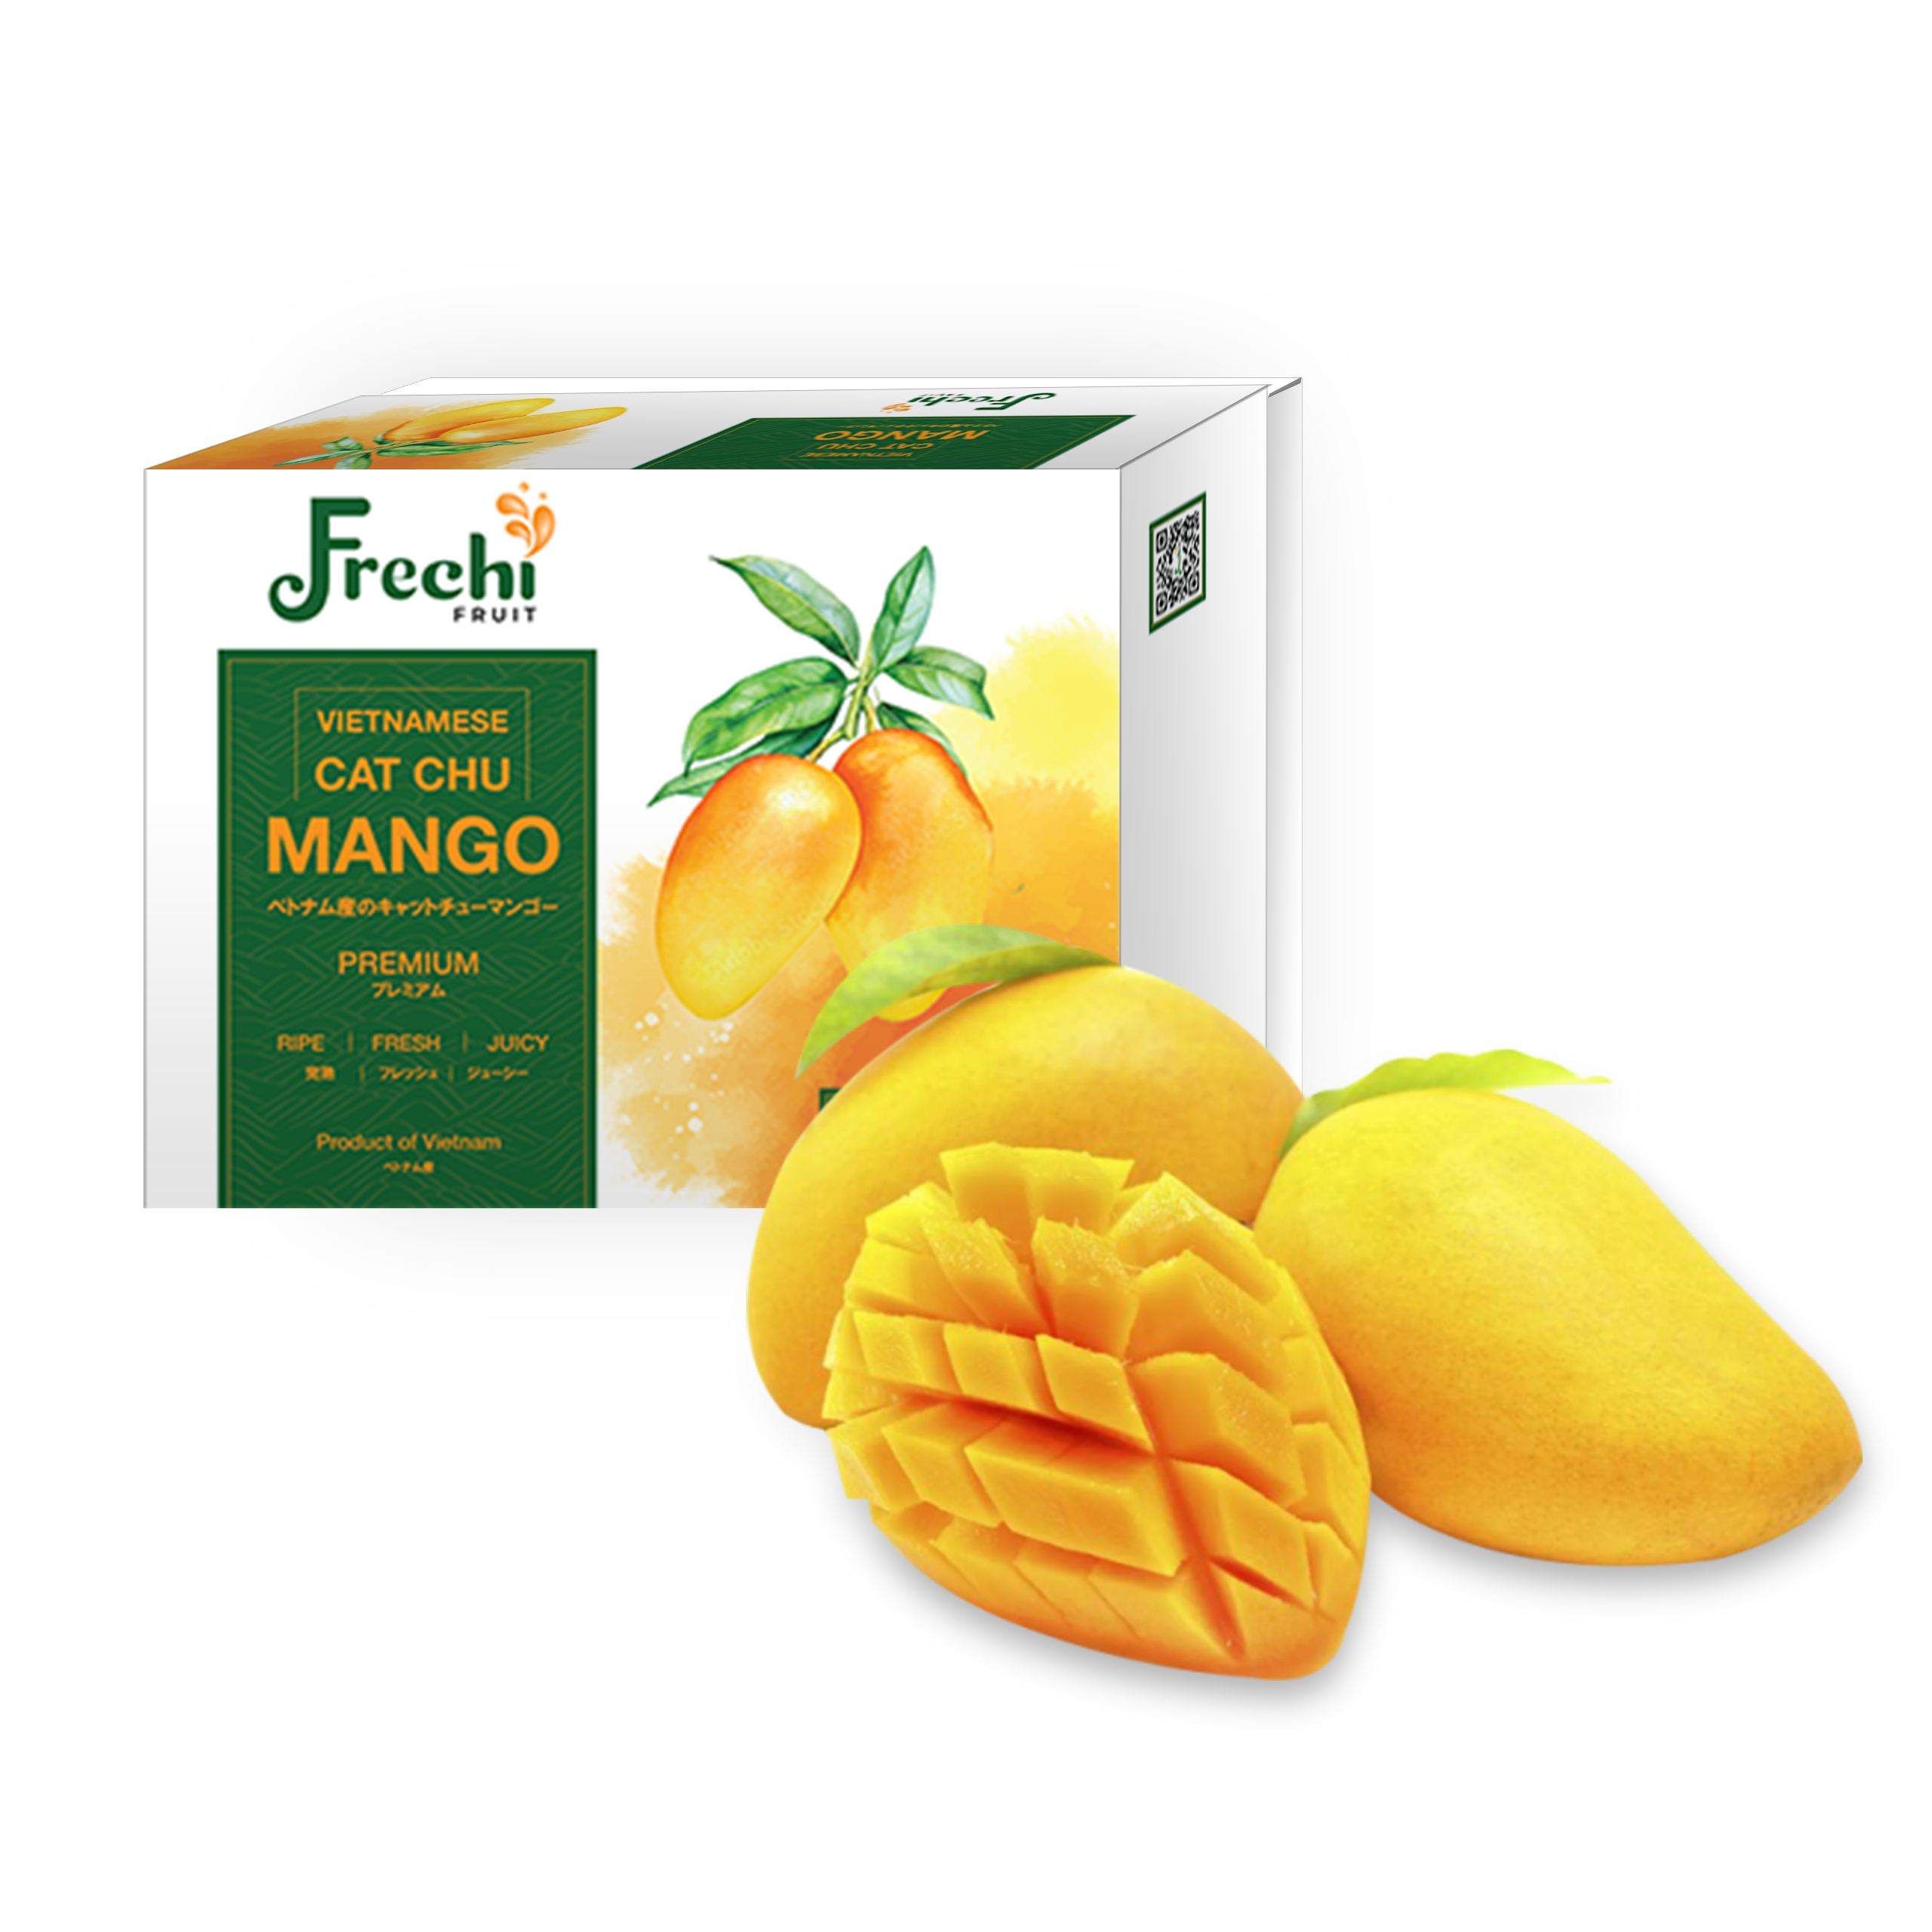 Fresh Green Mango – Frechi Japan